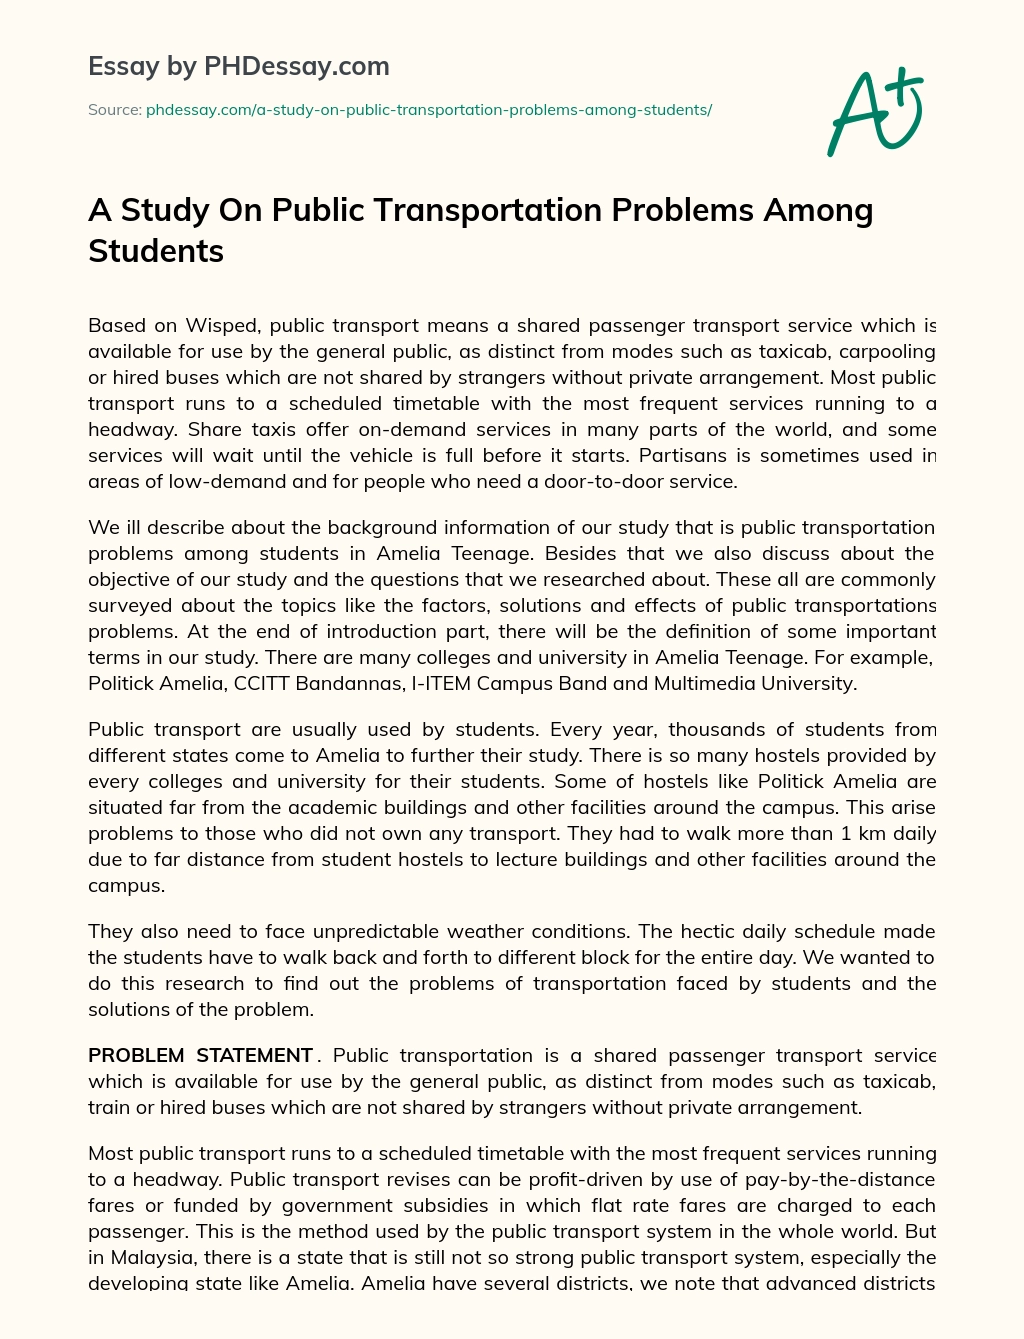 A Study On Public Transportation Problems Among Students essay